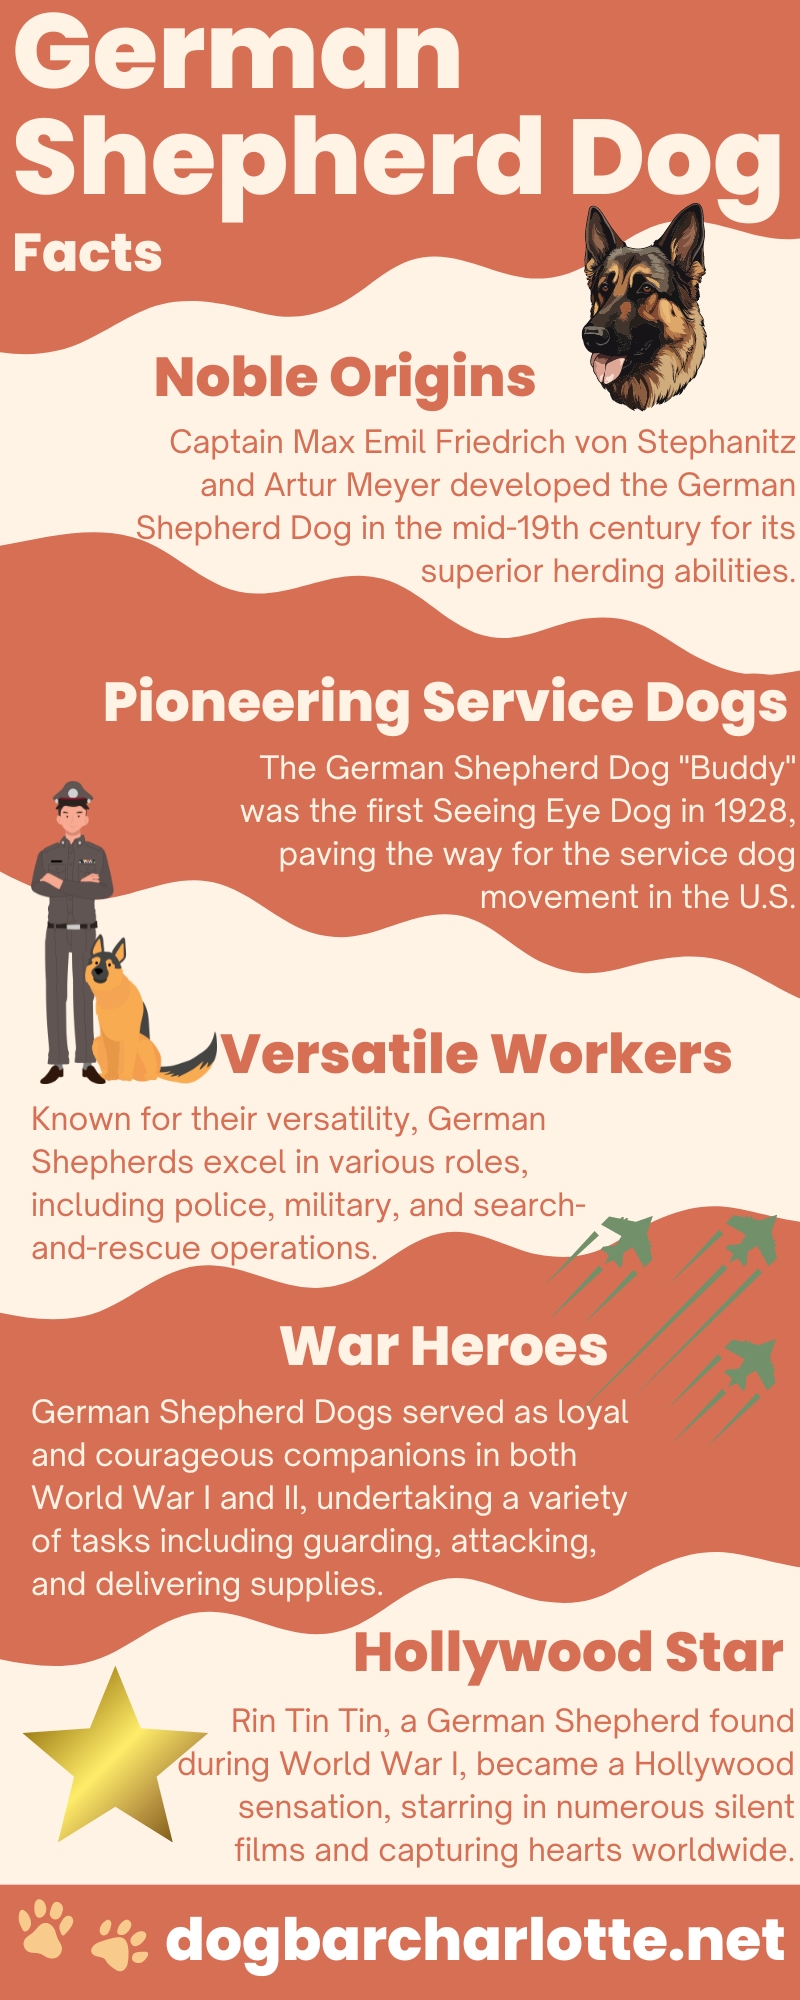 German Shepherd Dog Facts Infographic